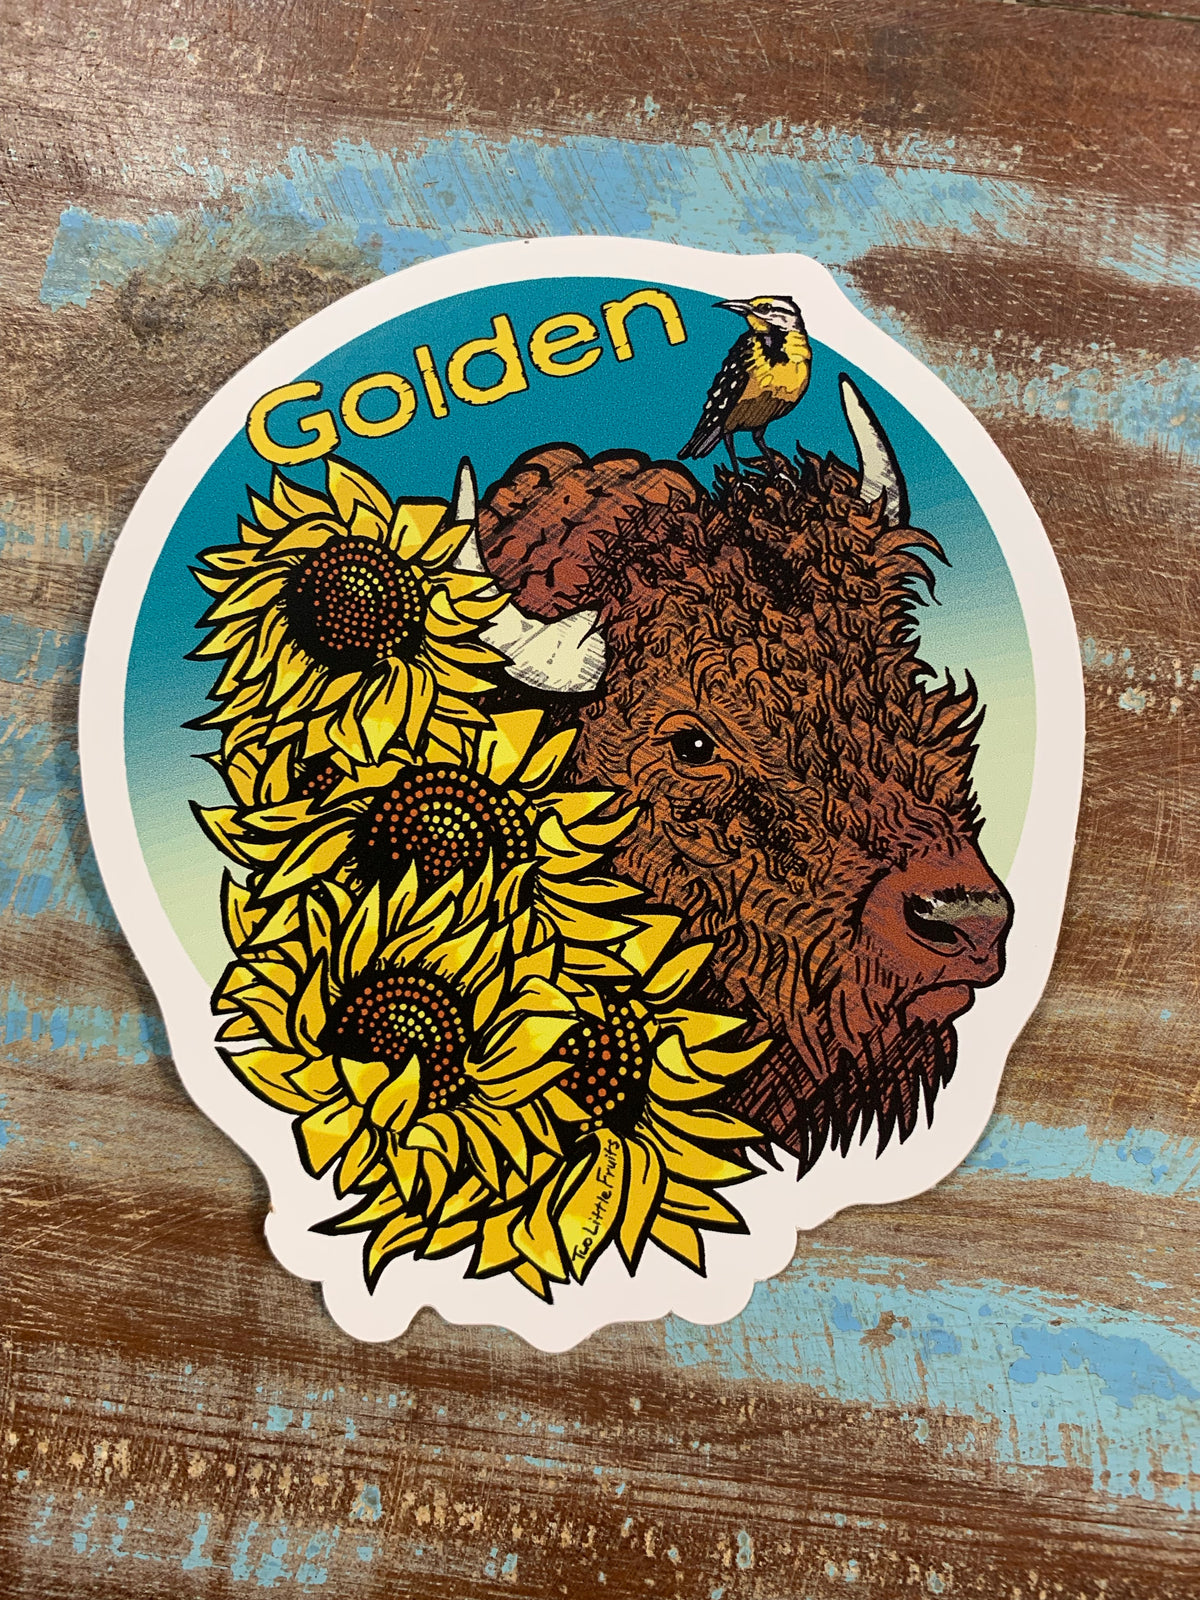 Bison and Sunflower Vinyl Sticker with Golden written above the bison's head